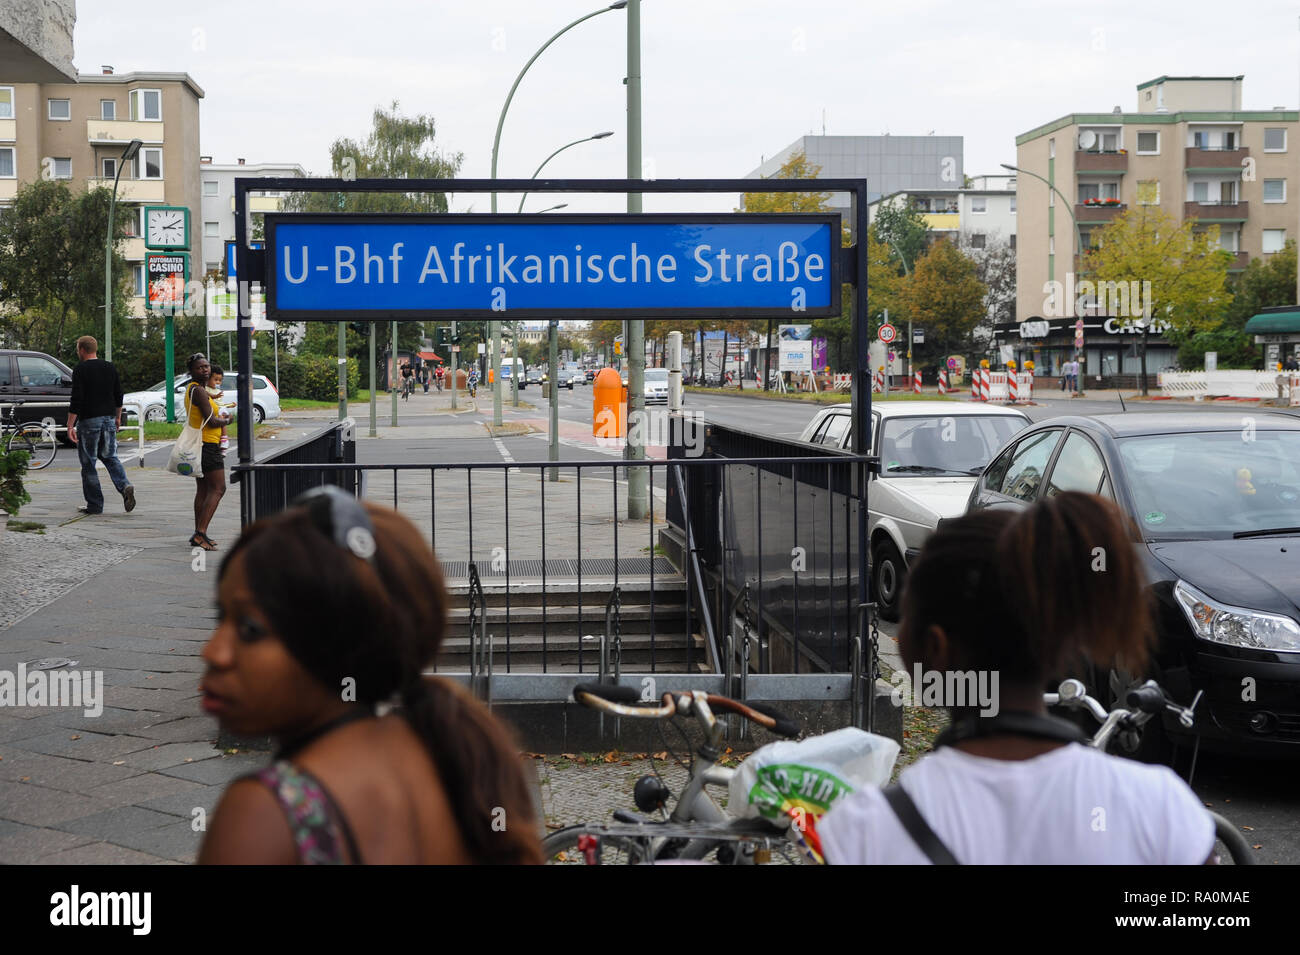 03.10.2011, Berlin, Deutschland, Europa - Zugang zum U-Bahnhof Afrikanische Strasse in Berlin-Wedding. 0SL111003D006CARO.JPG [MODEL RELEASE: NO, PROPE Stock Photo